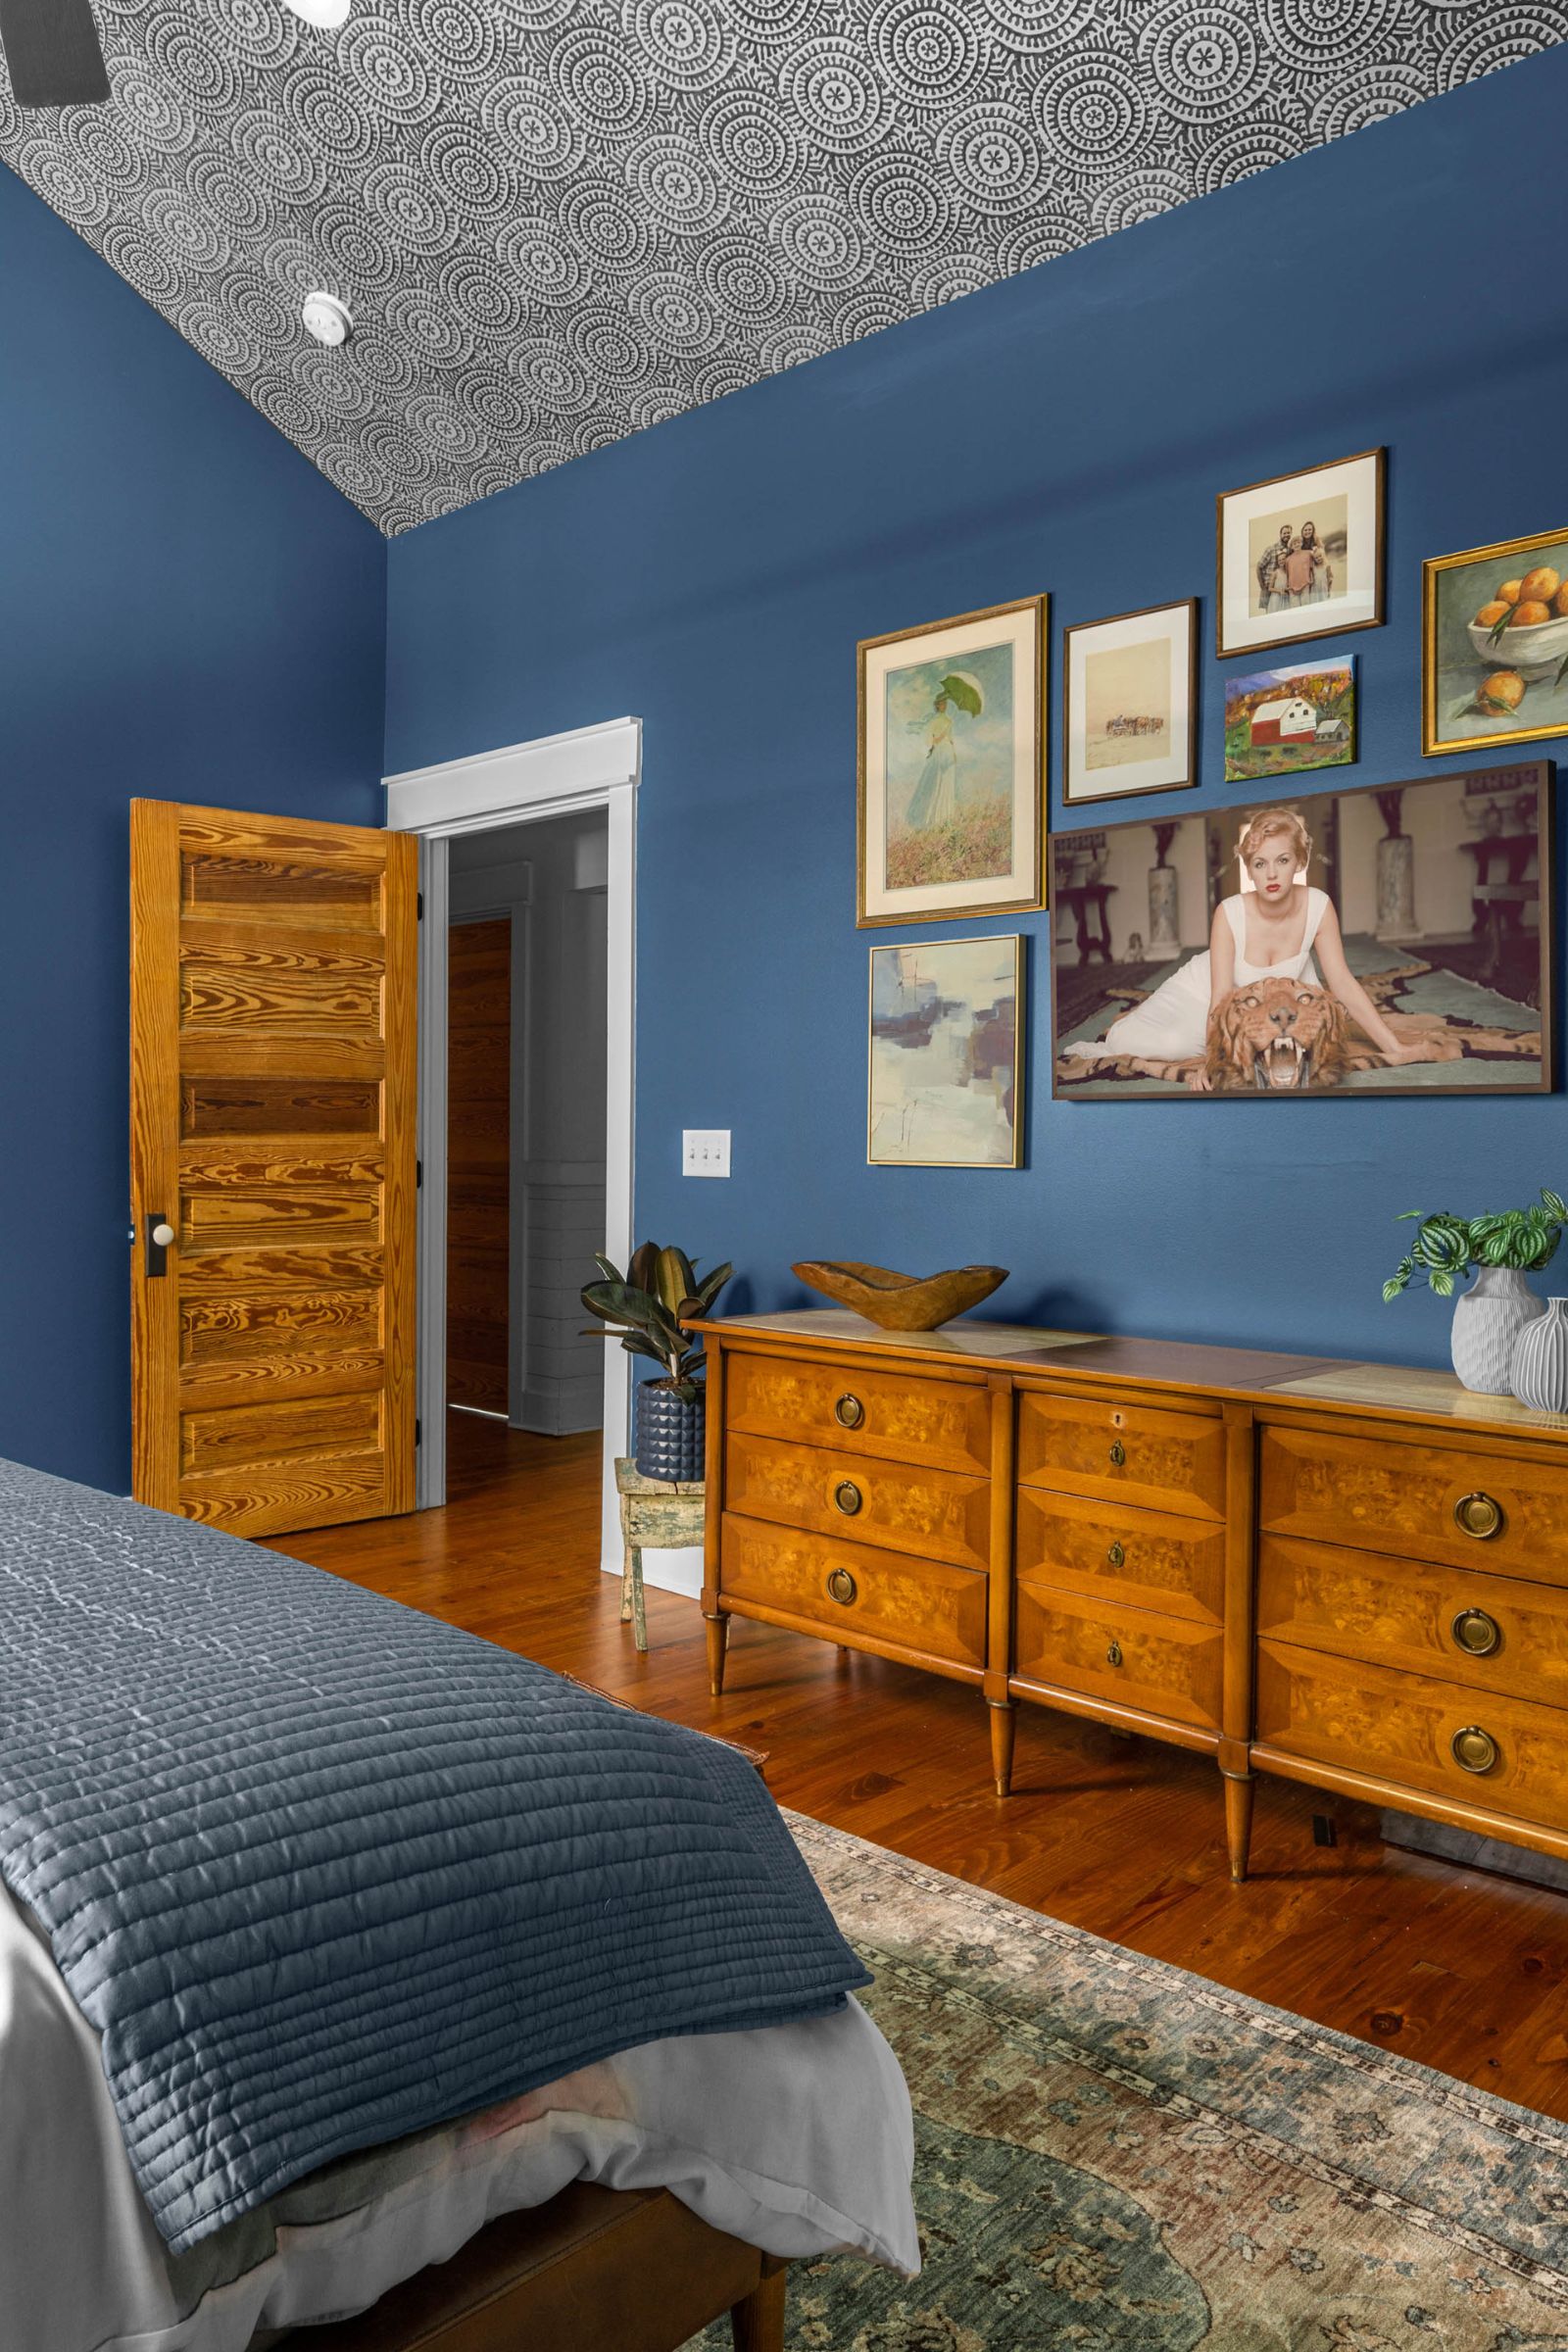 Navy blue farmhouse bedroom gallery wall - full-service interior design project - by Lesley Myrick Interior Design in Macon, GA